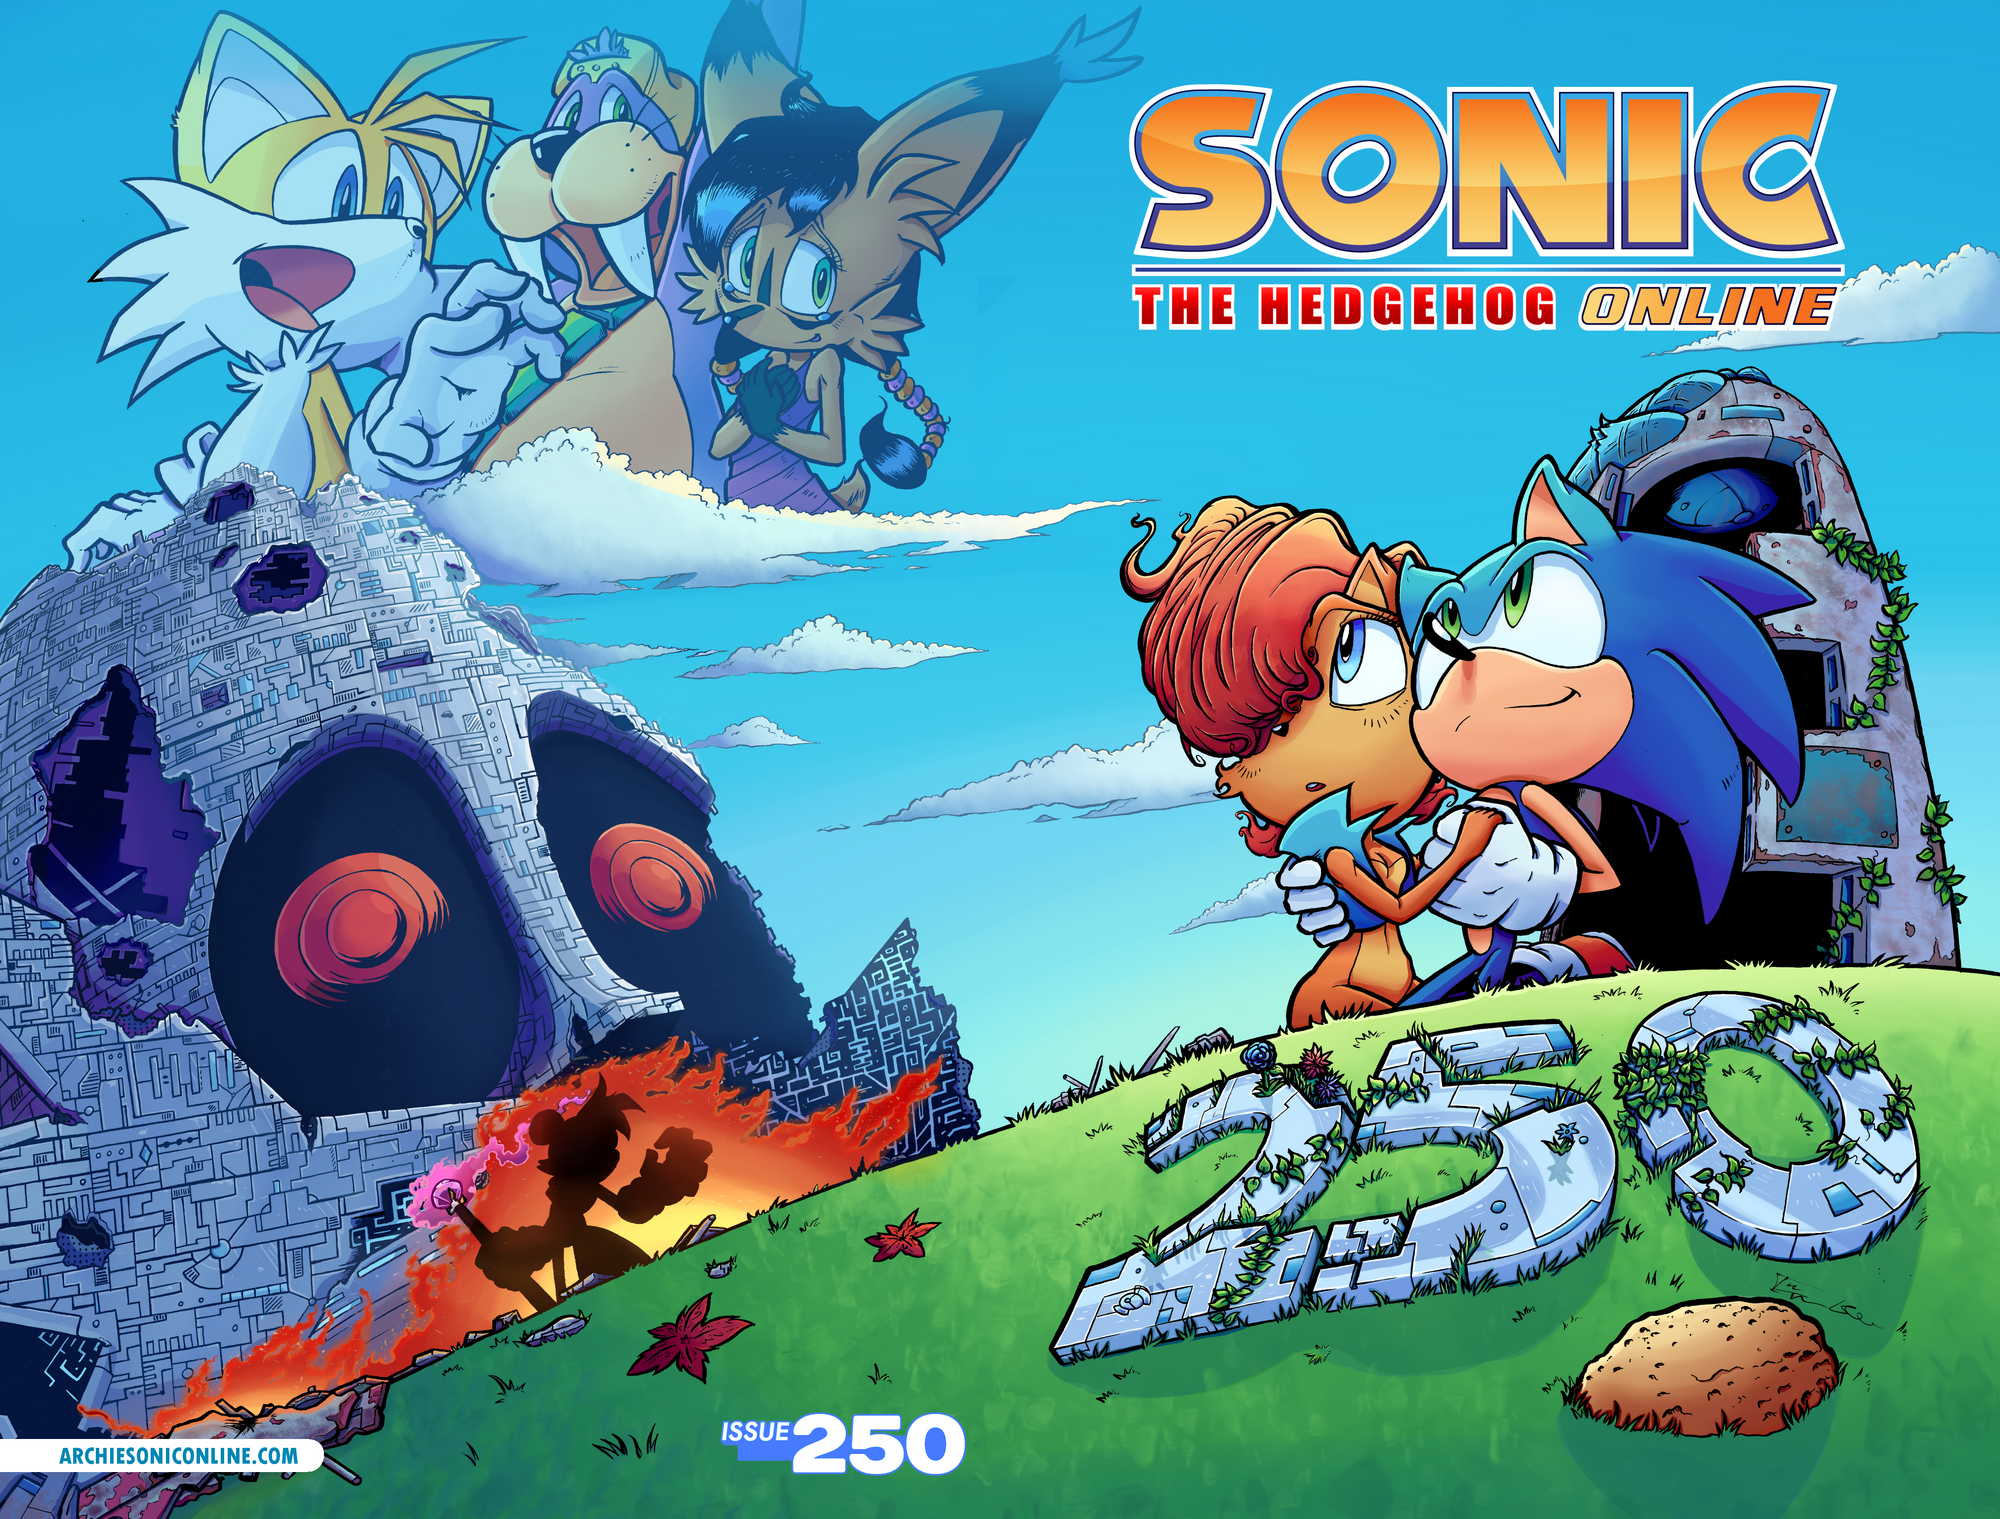 Sonic the Hedgehog Online Issue 250 Archie Sonic Online Wiki Fandom